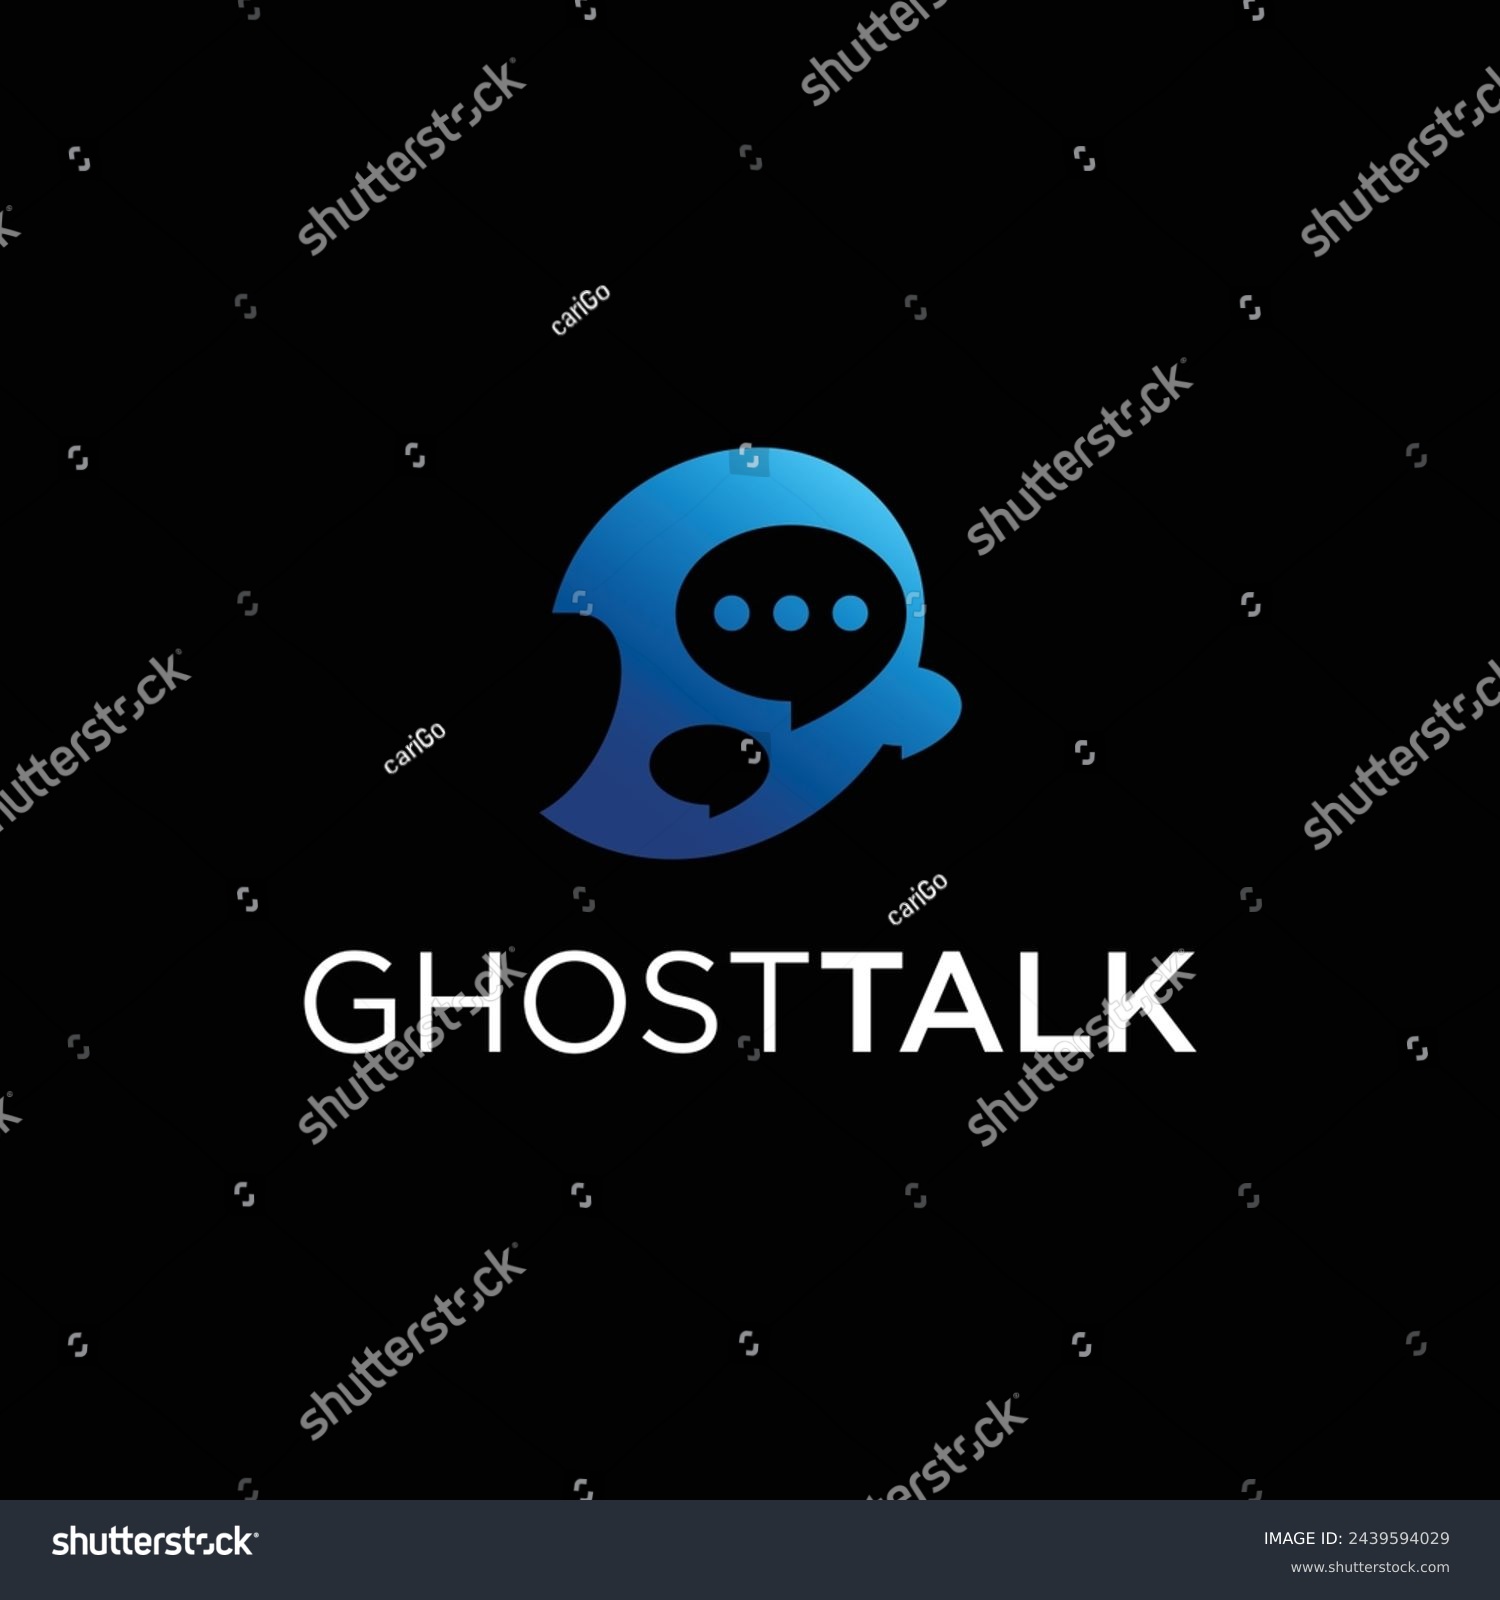 SVG of ghost talk wings hallo ween vector logo designs concept. svg